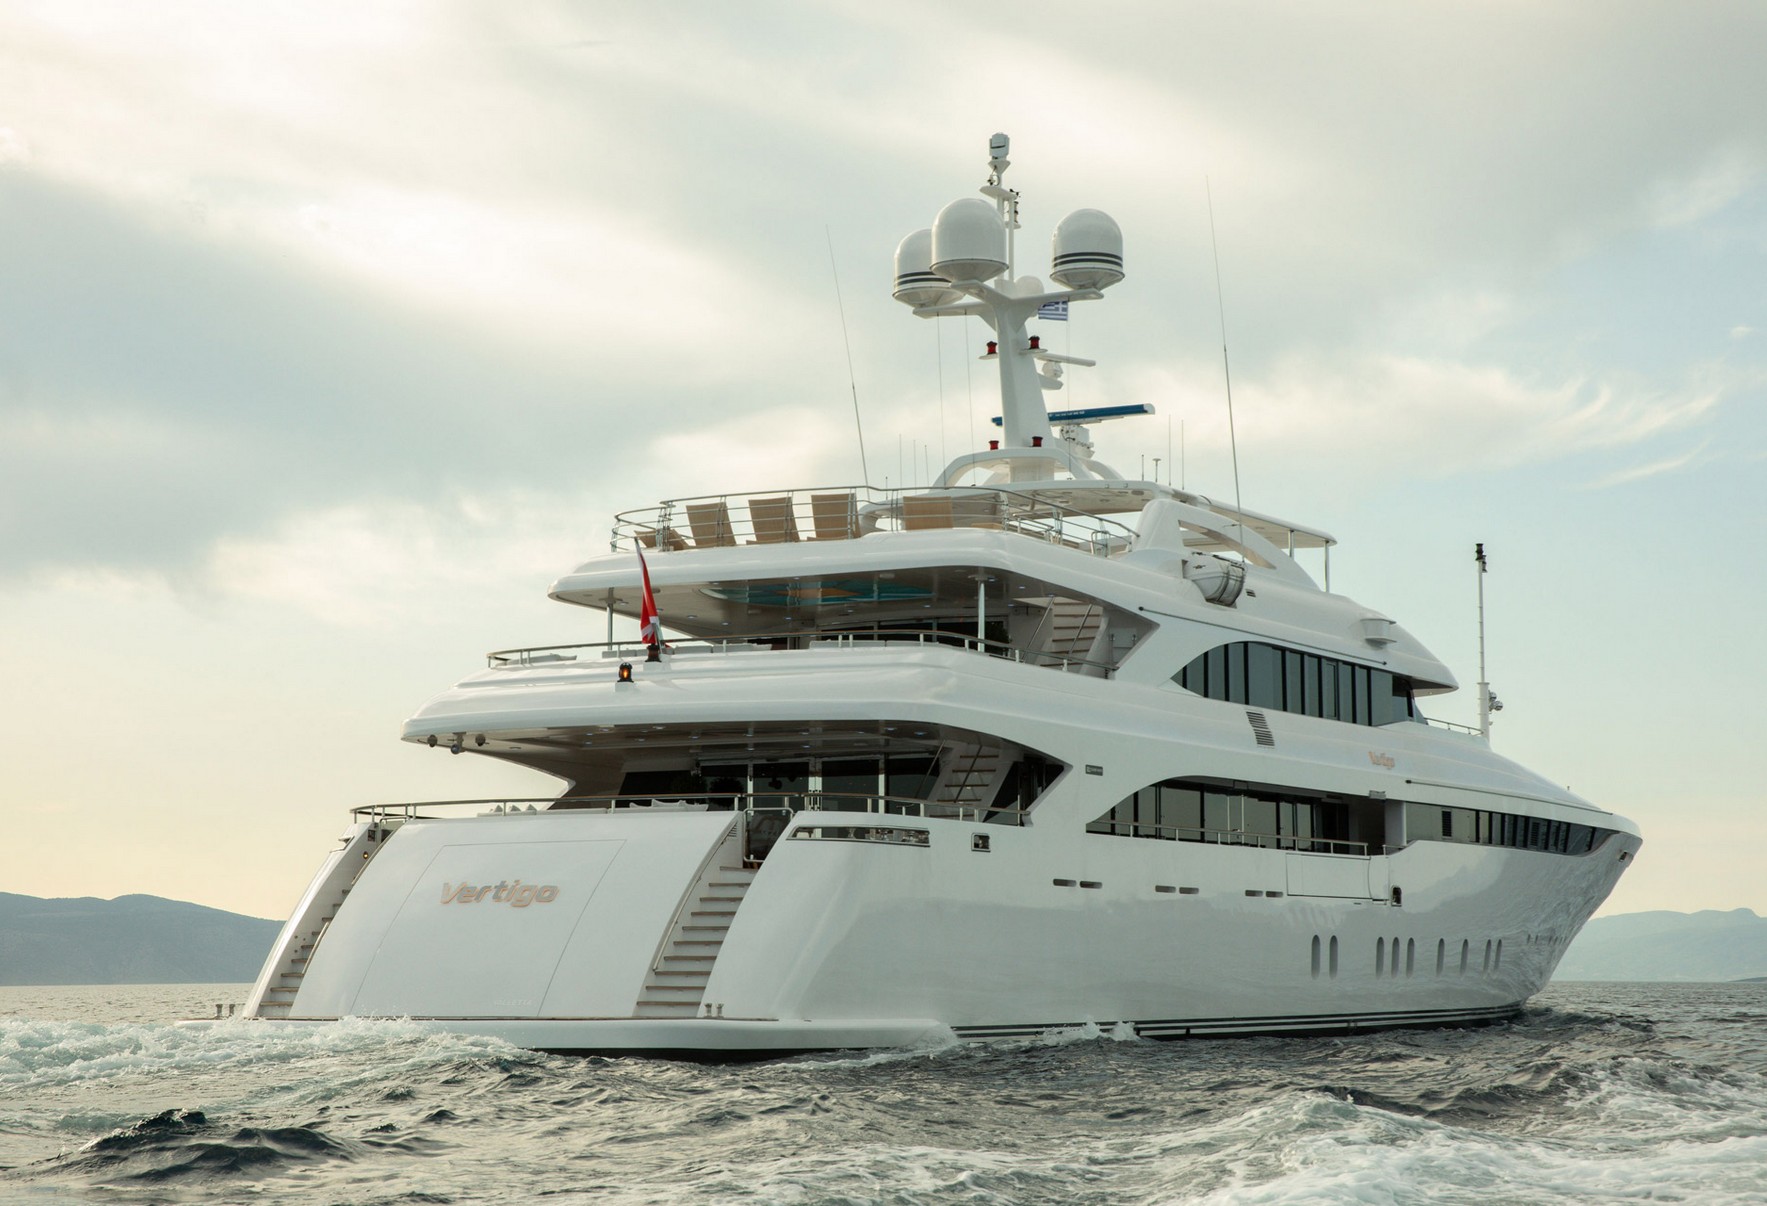 vertigo yacht charter